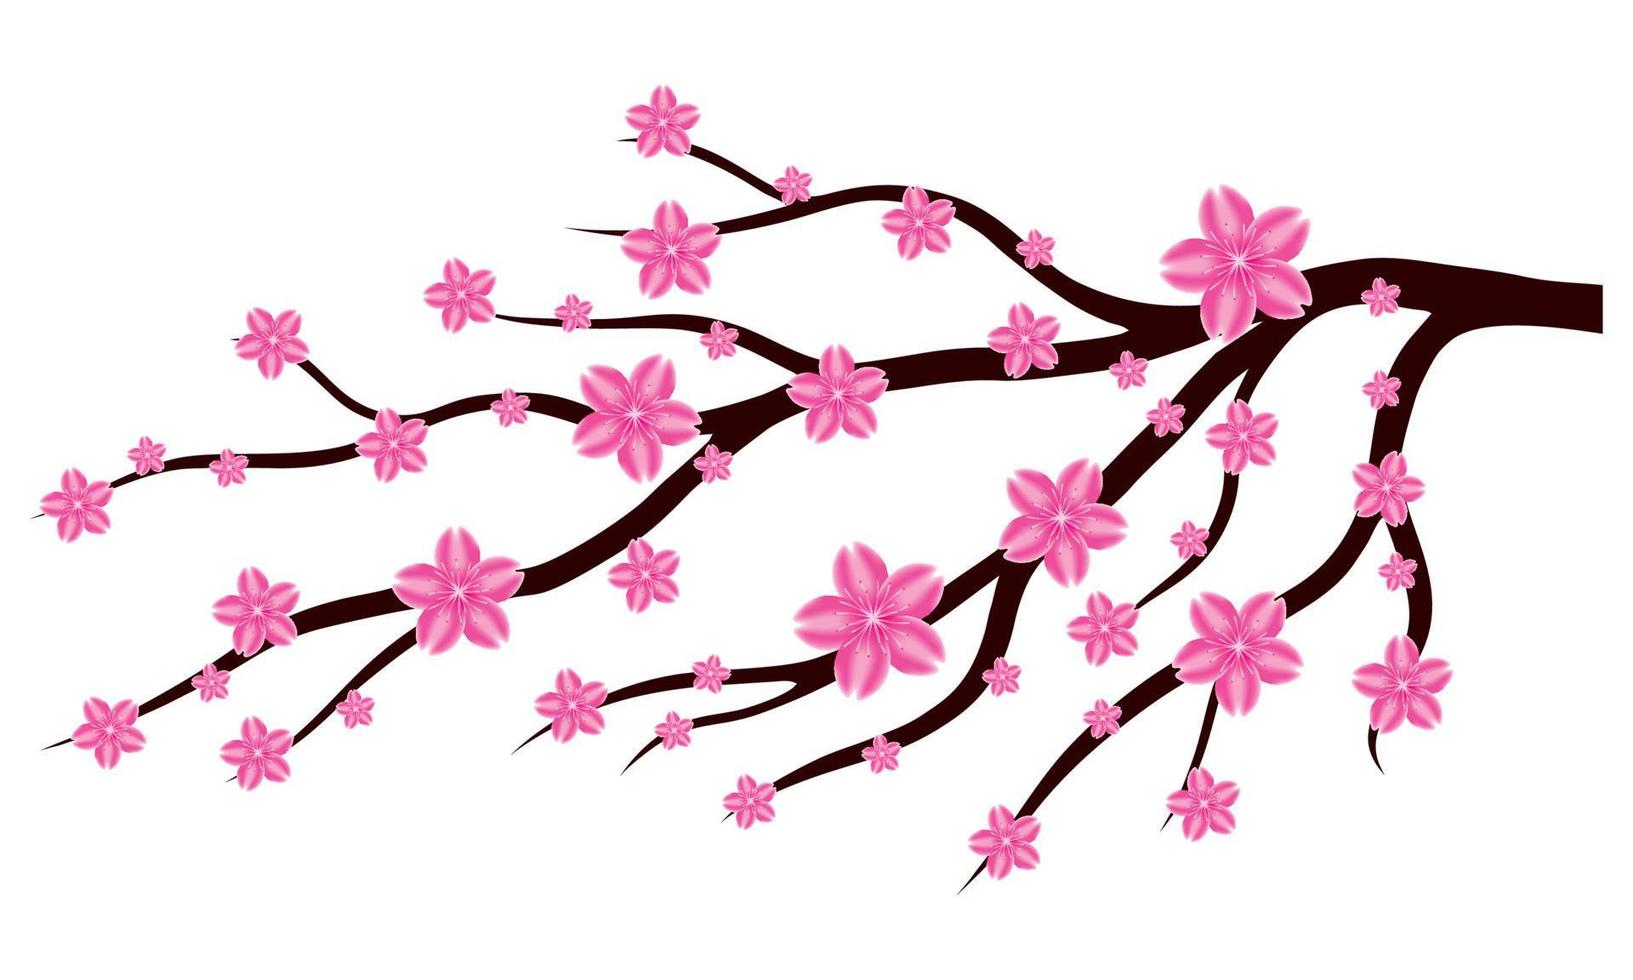 Sakura or cherry blossom flower branch on white background. Design ornament for printing on cards, invitations vector